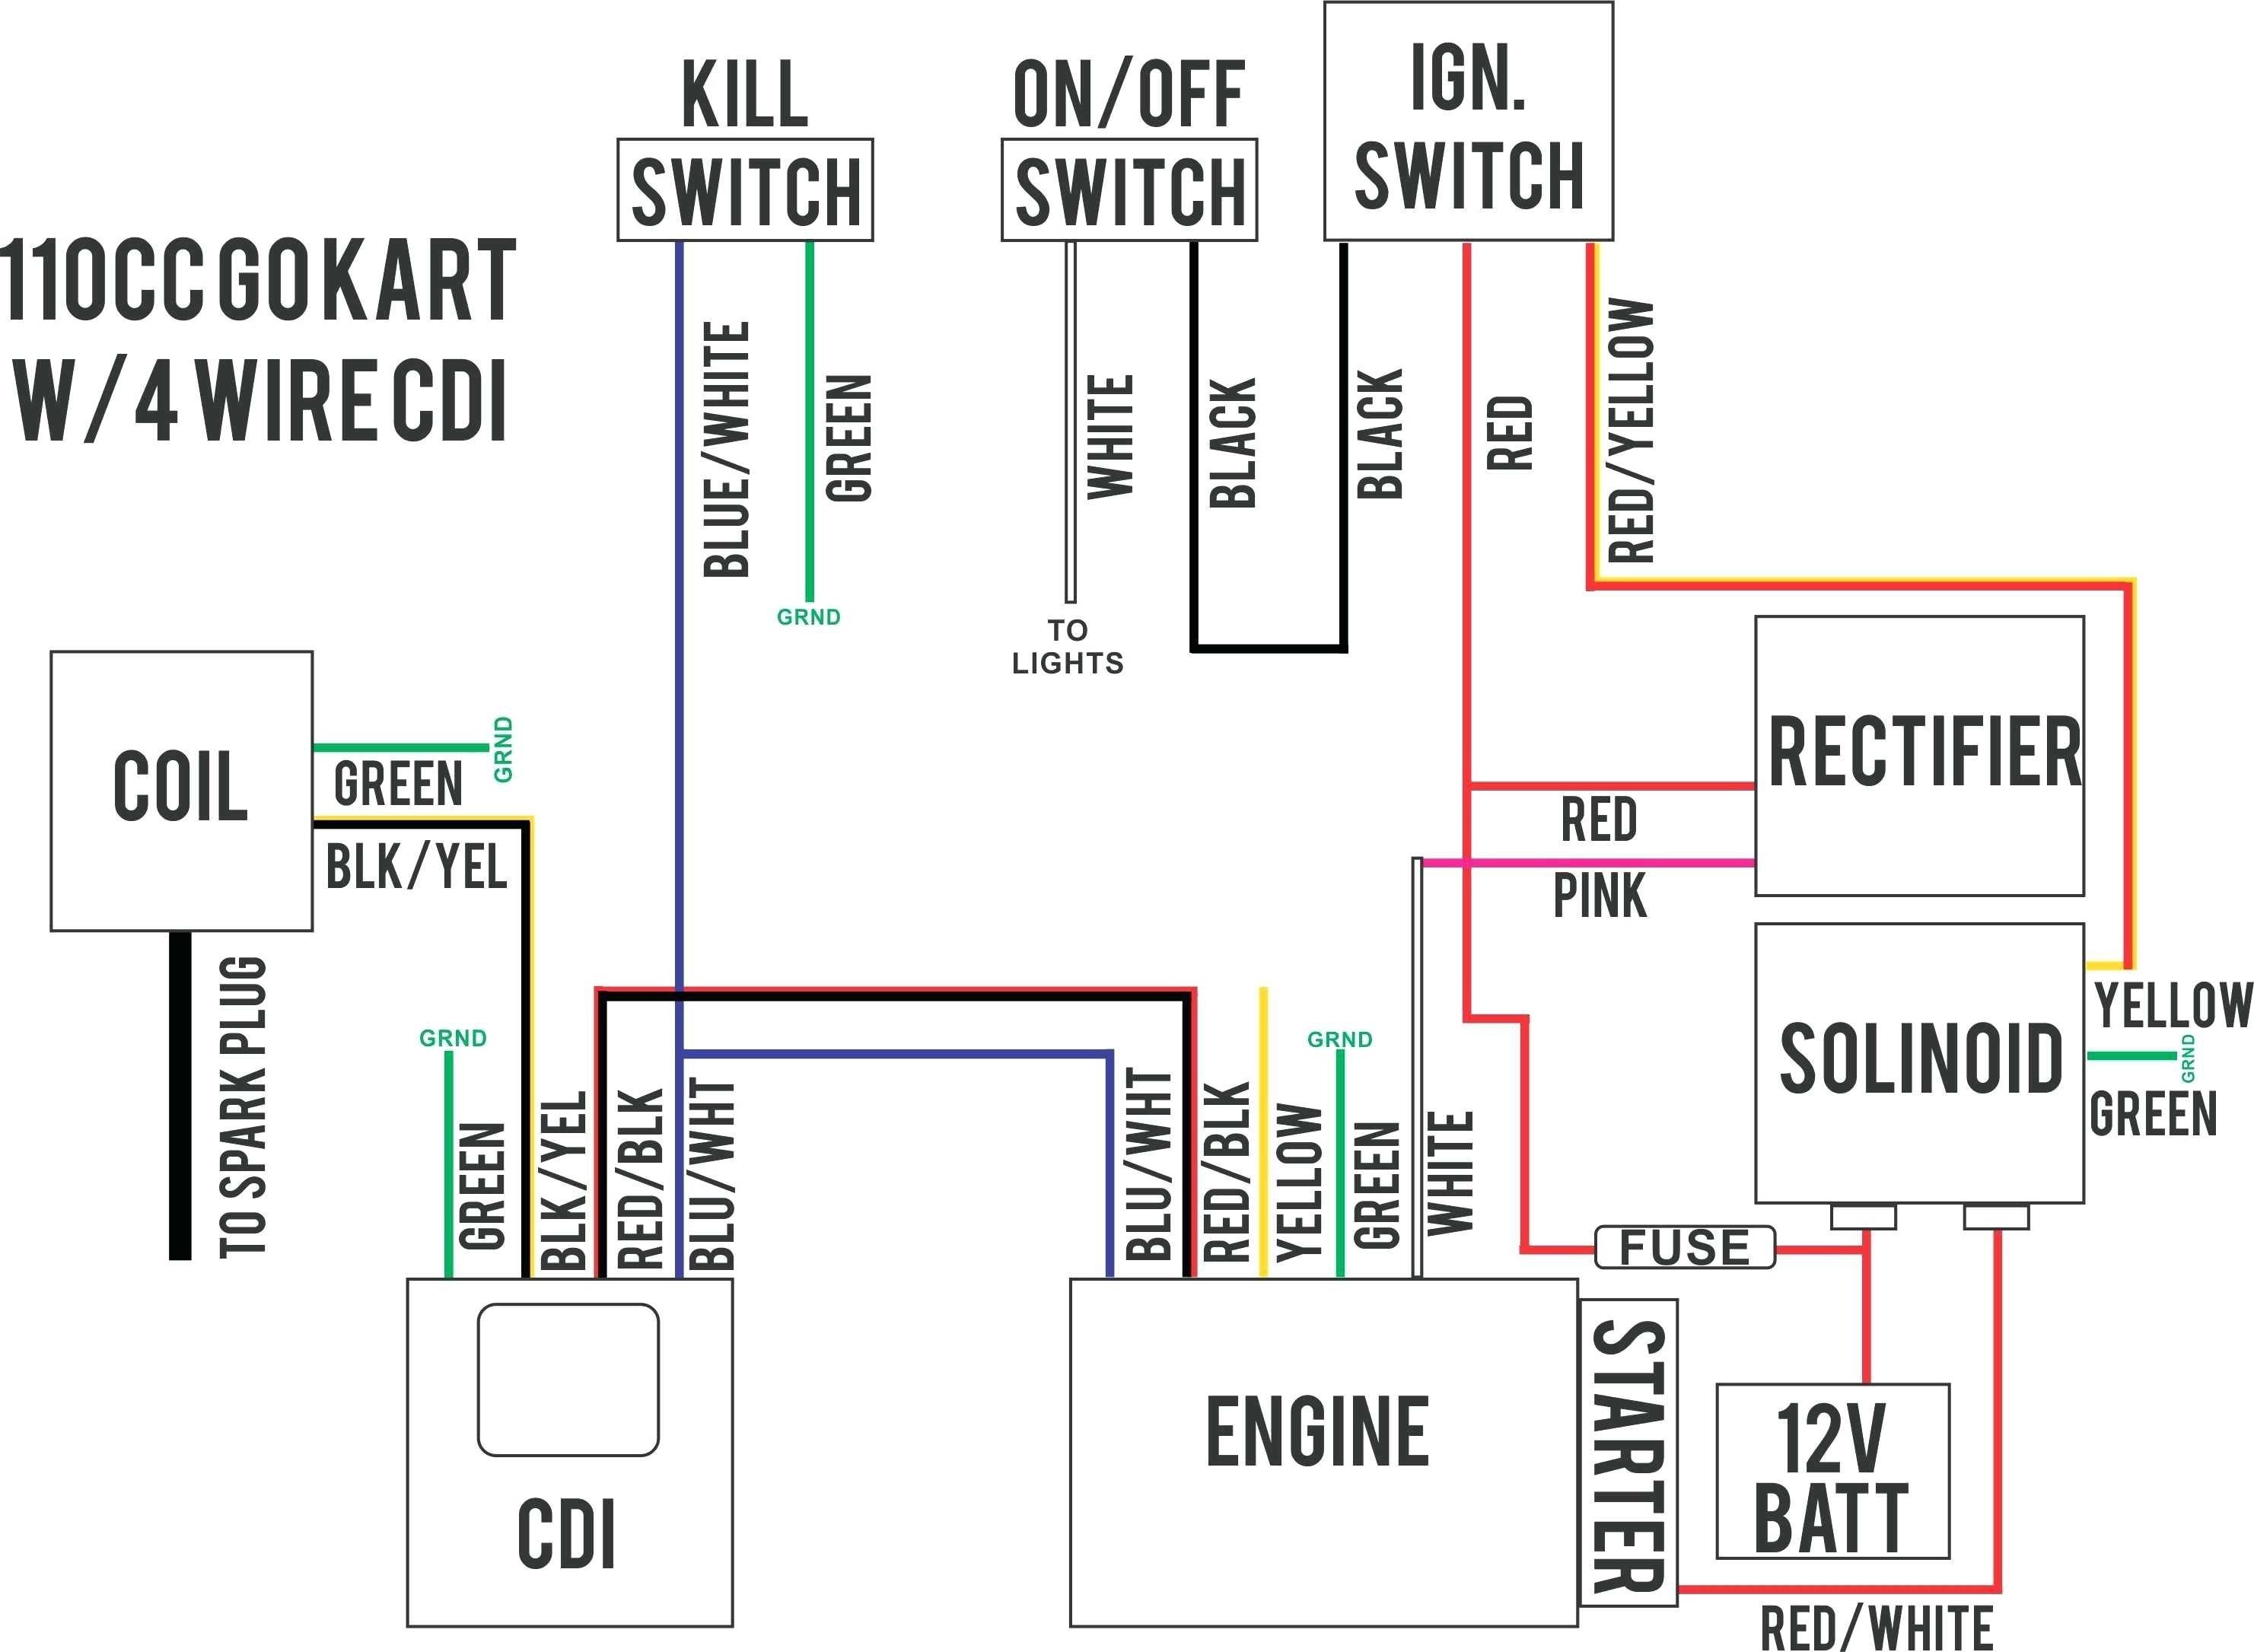 1982 honda c70 passport wiring diagram new wiring diagram ignition rh yourproducthere co racing cdi wiring